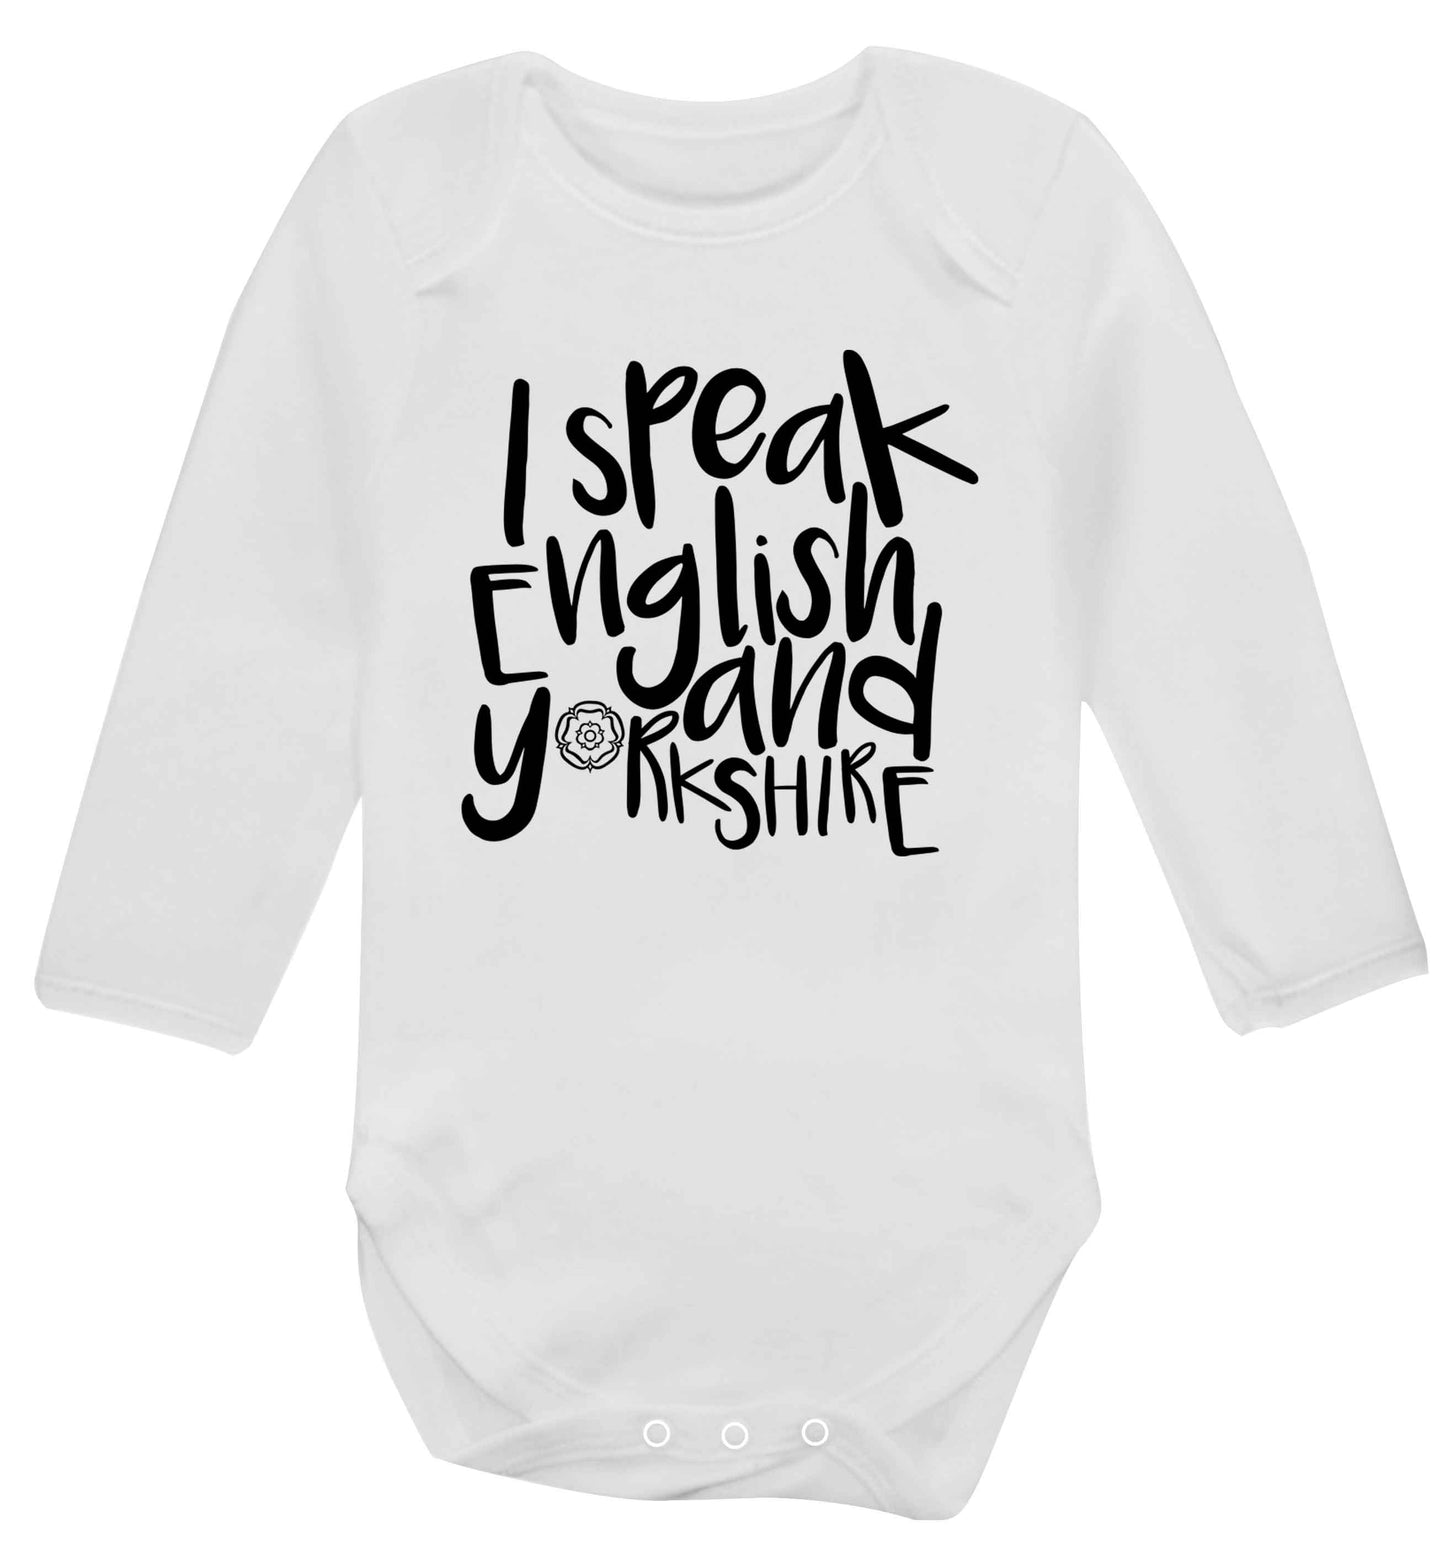 I speak English and Yorkshire Baby Vest long sleeved white 6-12 months